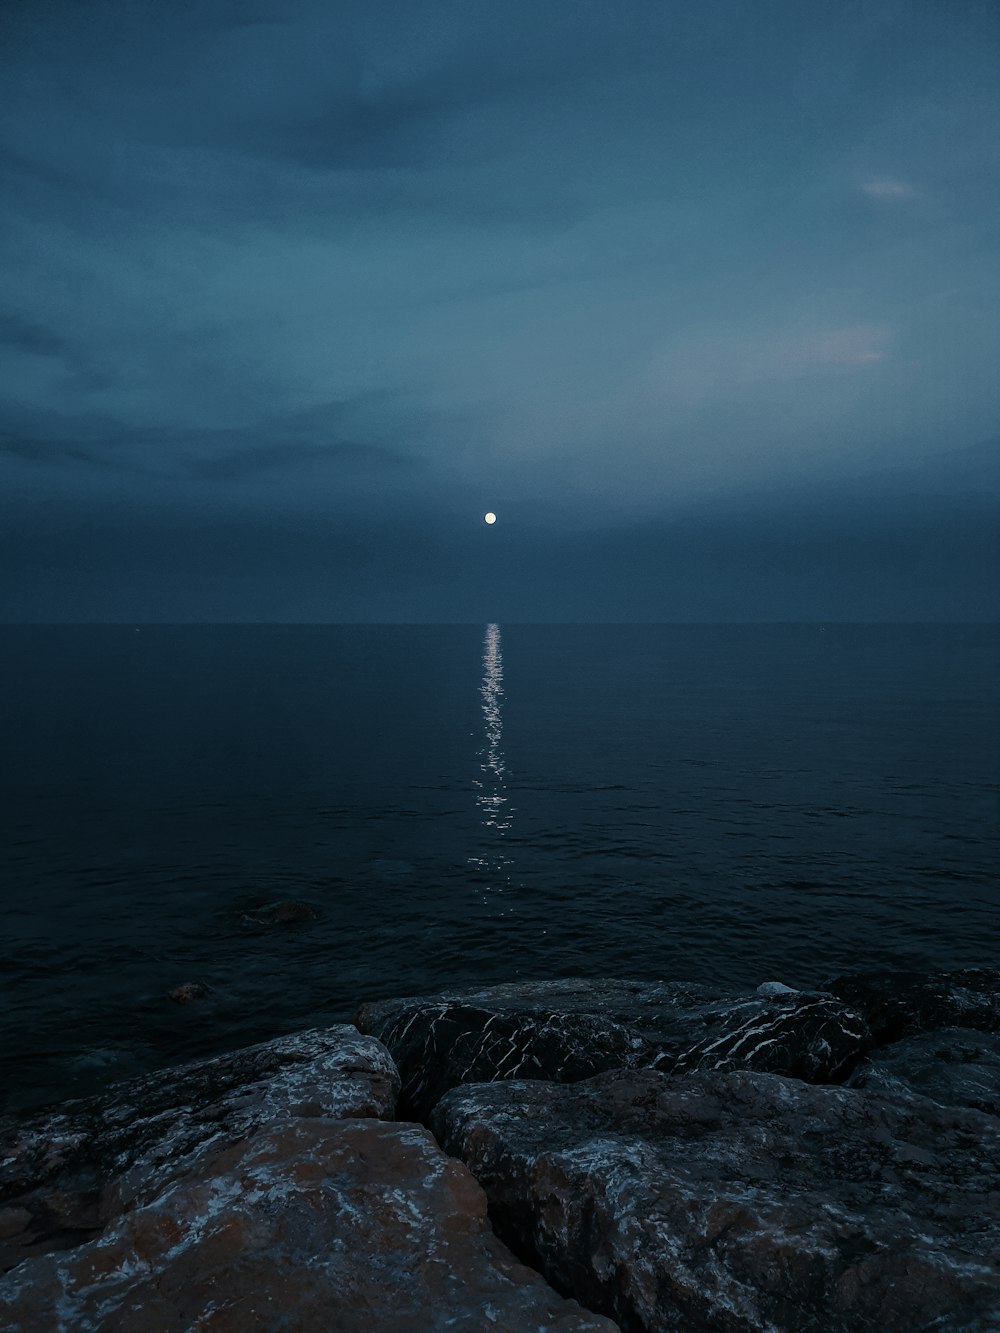 a full moon is seen over the ocean